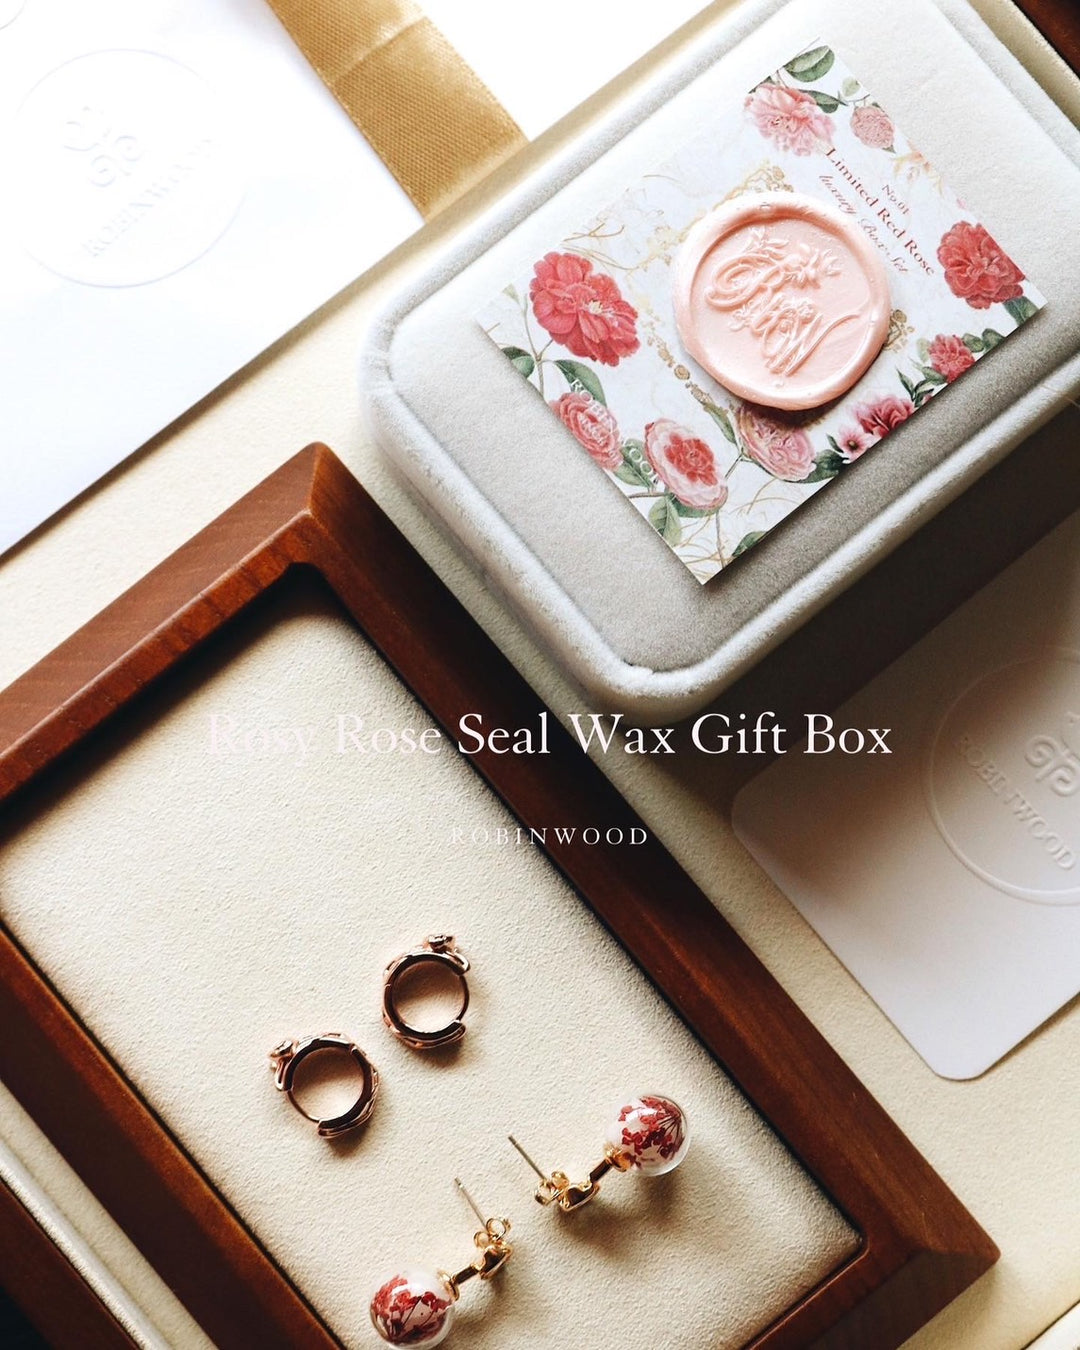 Limited Collection's " Hiogi Japan & Sakura Flower Earrings  ", Robinwood Masterpieces